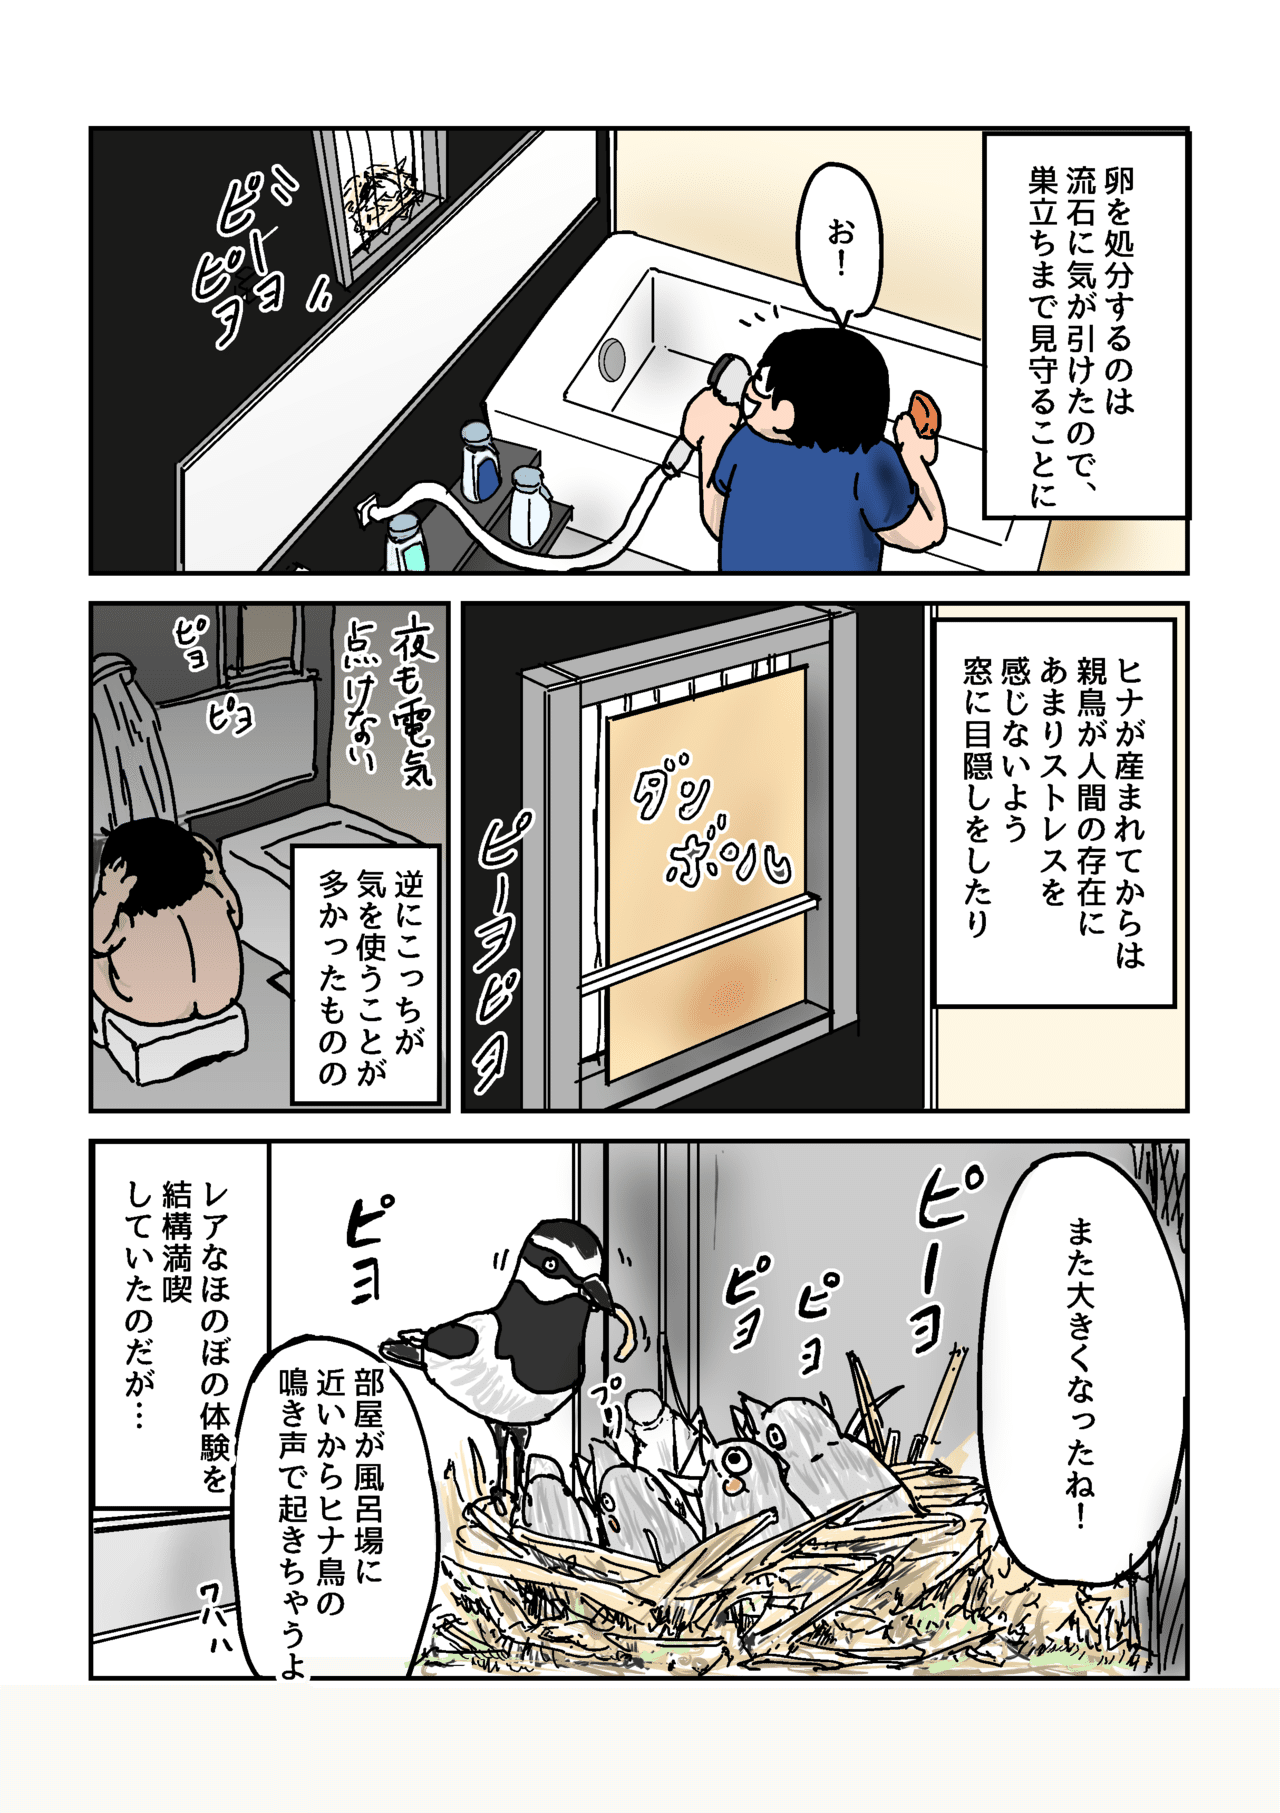 20190324-シジュウカラ_003